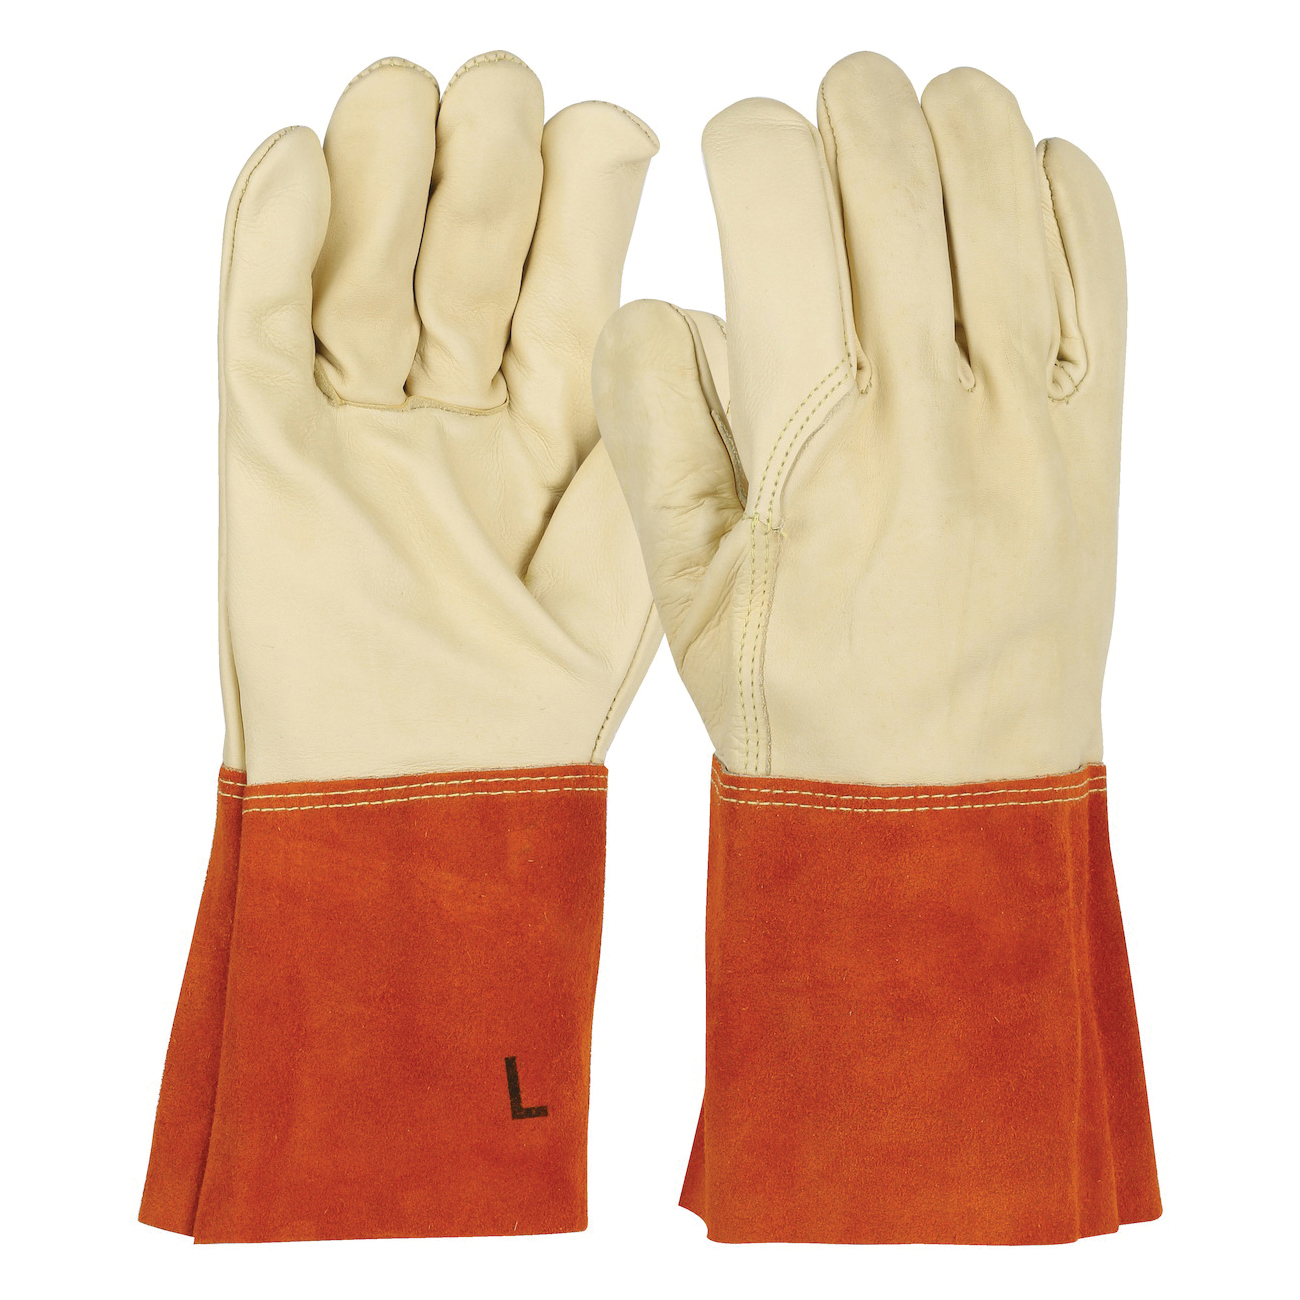 Premium Welders Welding Gloves Gauntlets Reinforced-Lined-K E V L A R Stitched